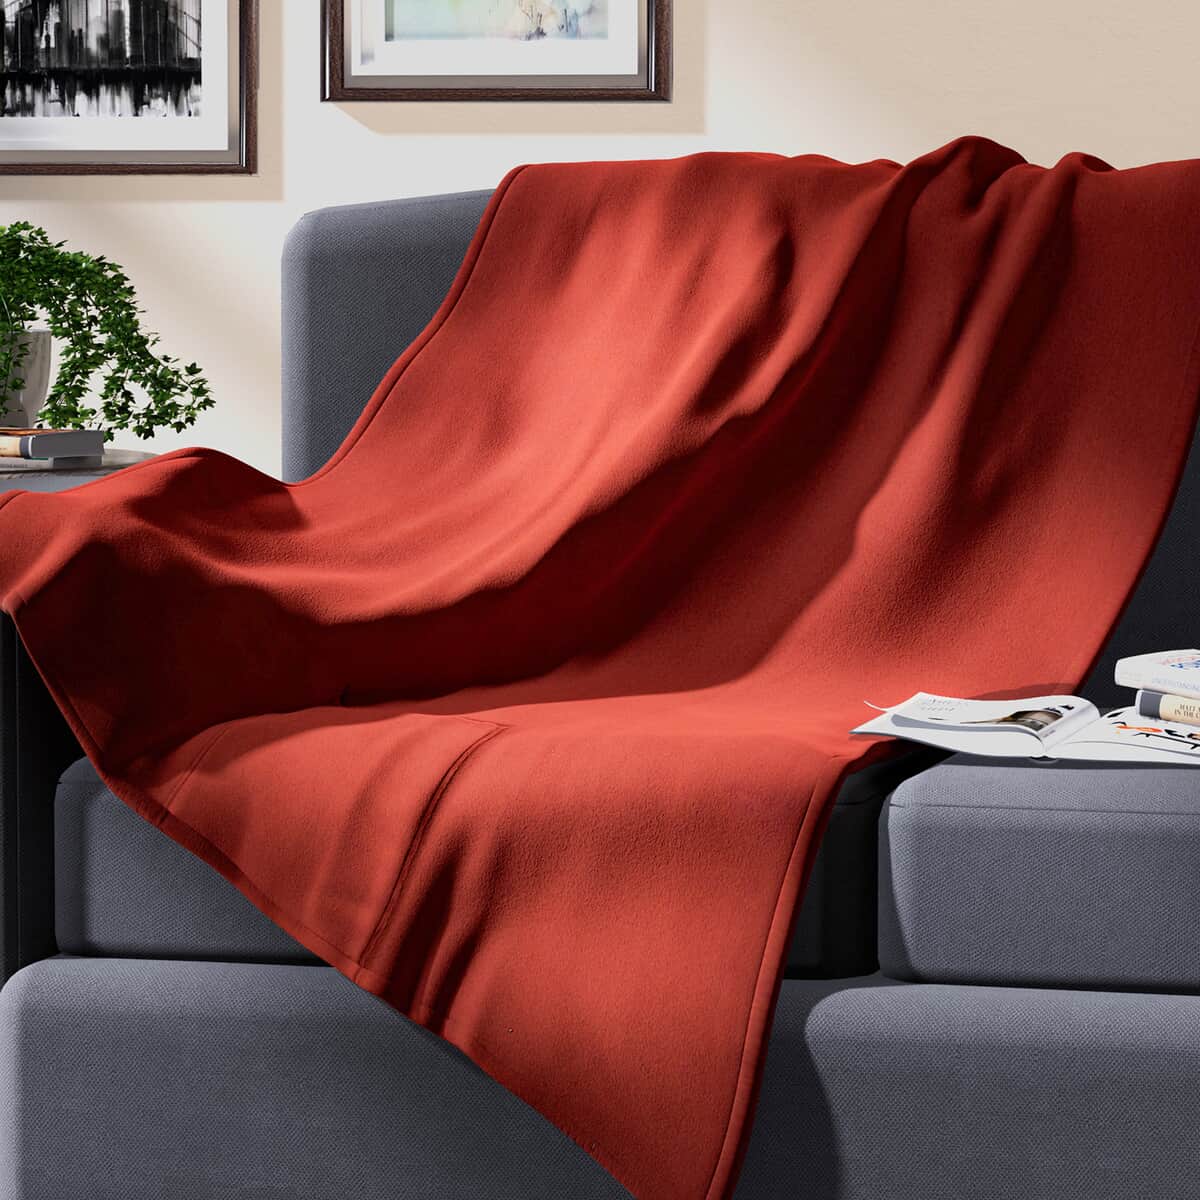 HOMESMART 2 in 1 Red Solid Fleece Travel Blanket (51"X67") with Folded Storage Pocket (Microfiber) image number 0